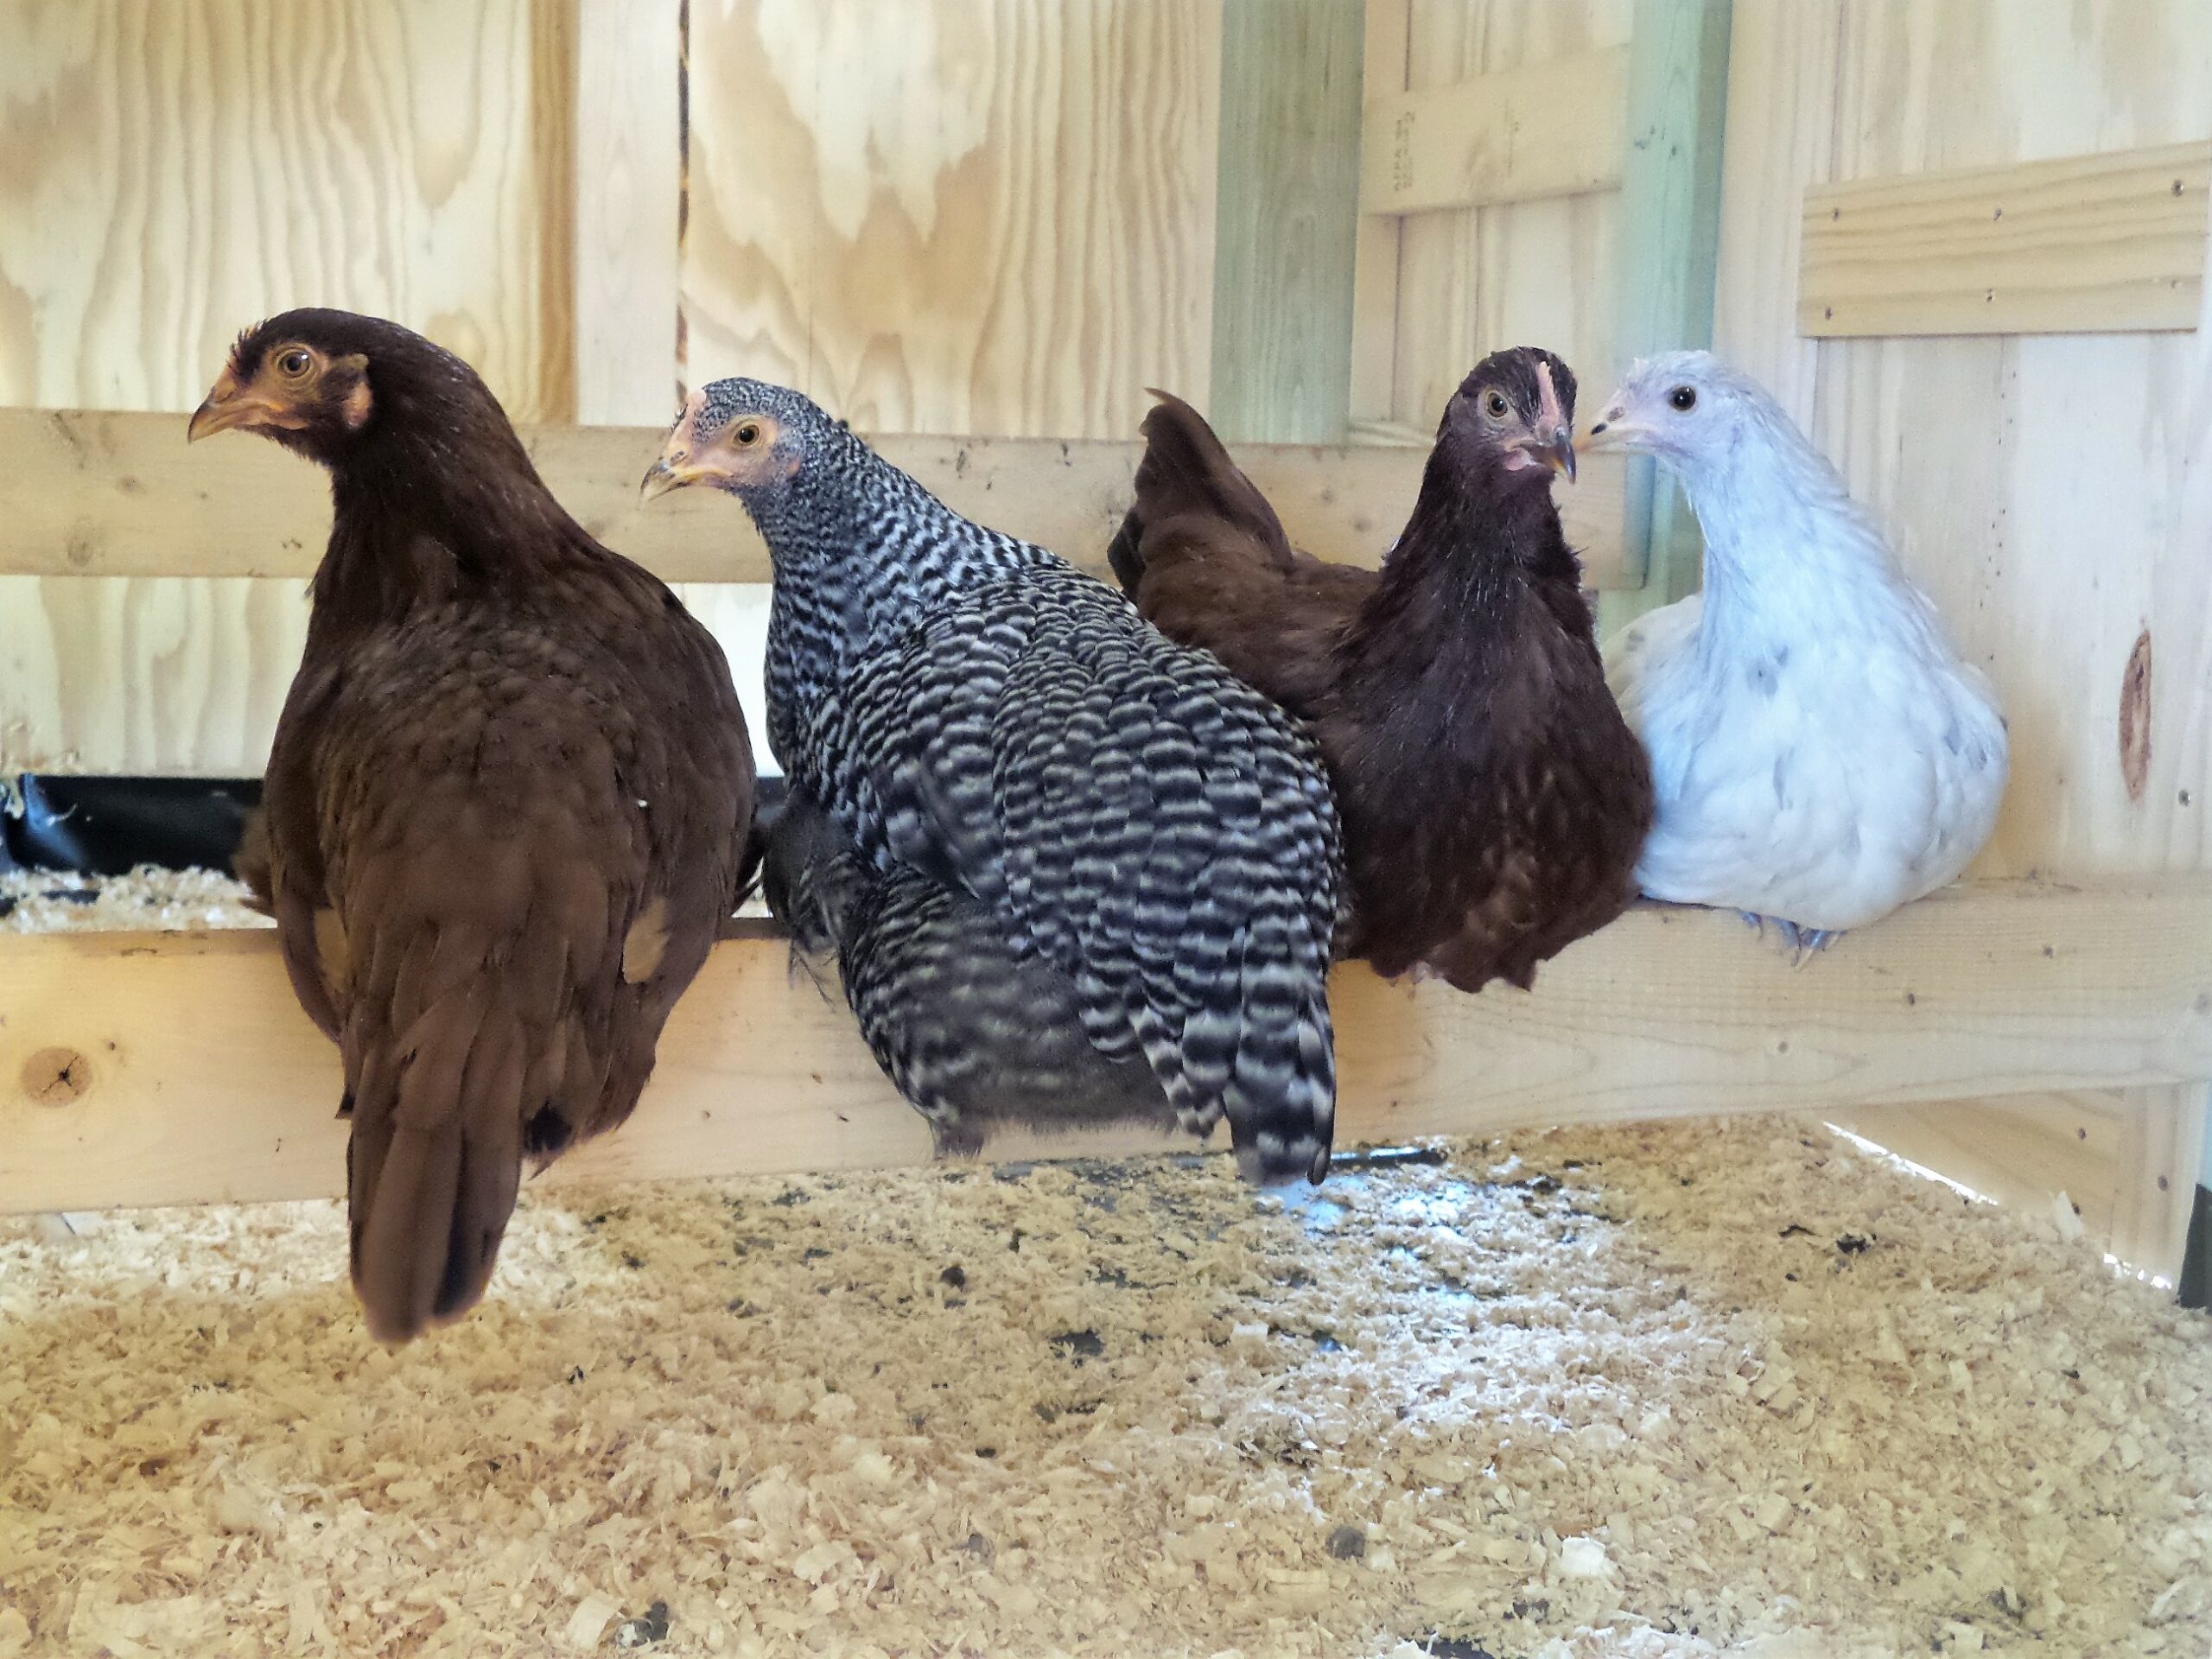 Chicken are through Little Farm Hands Program in the Alltech Farmyard Animal Experience